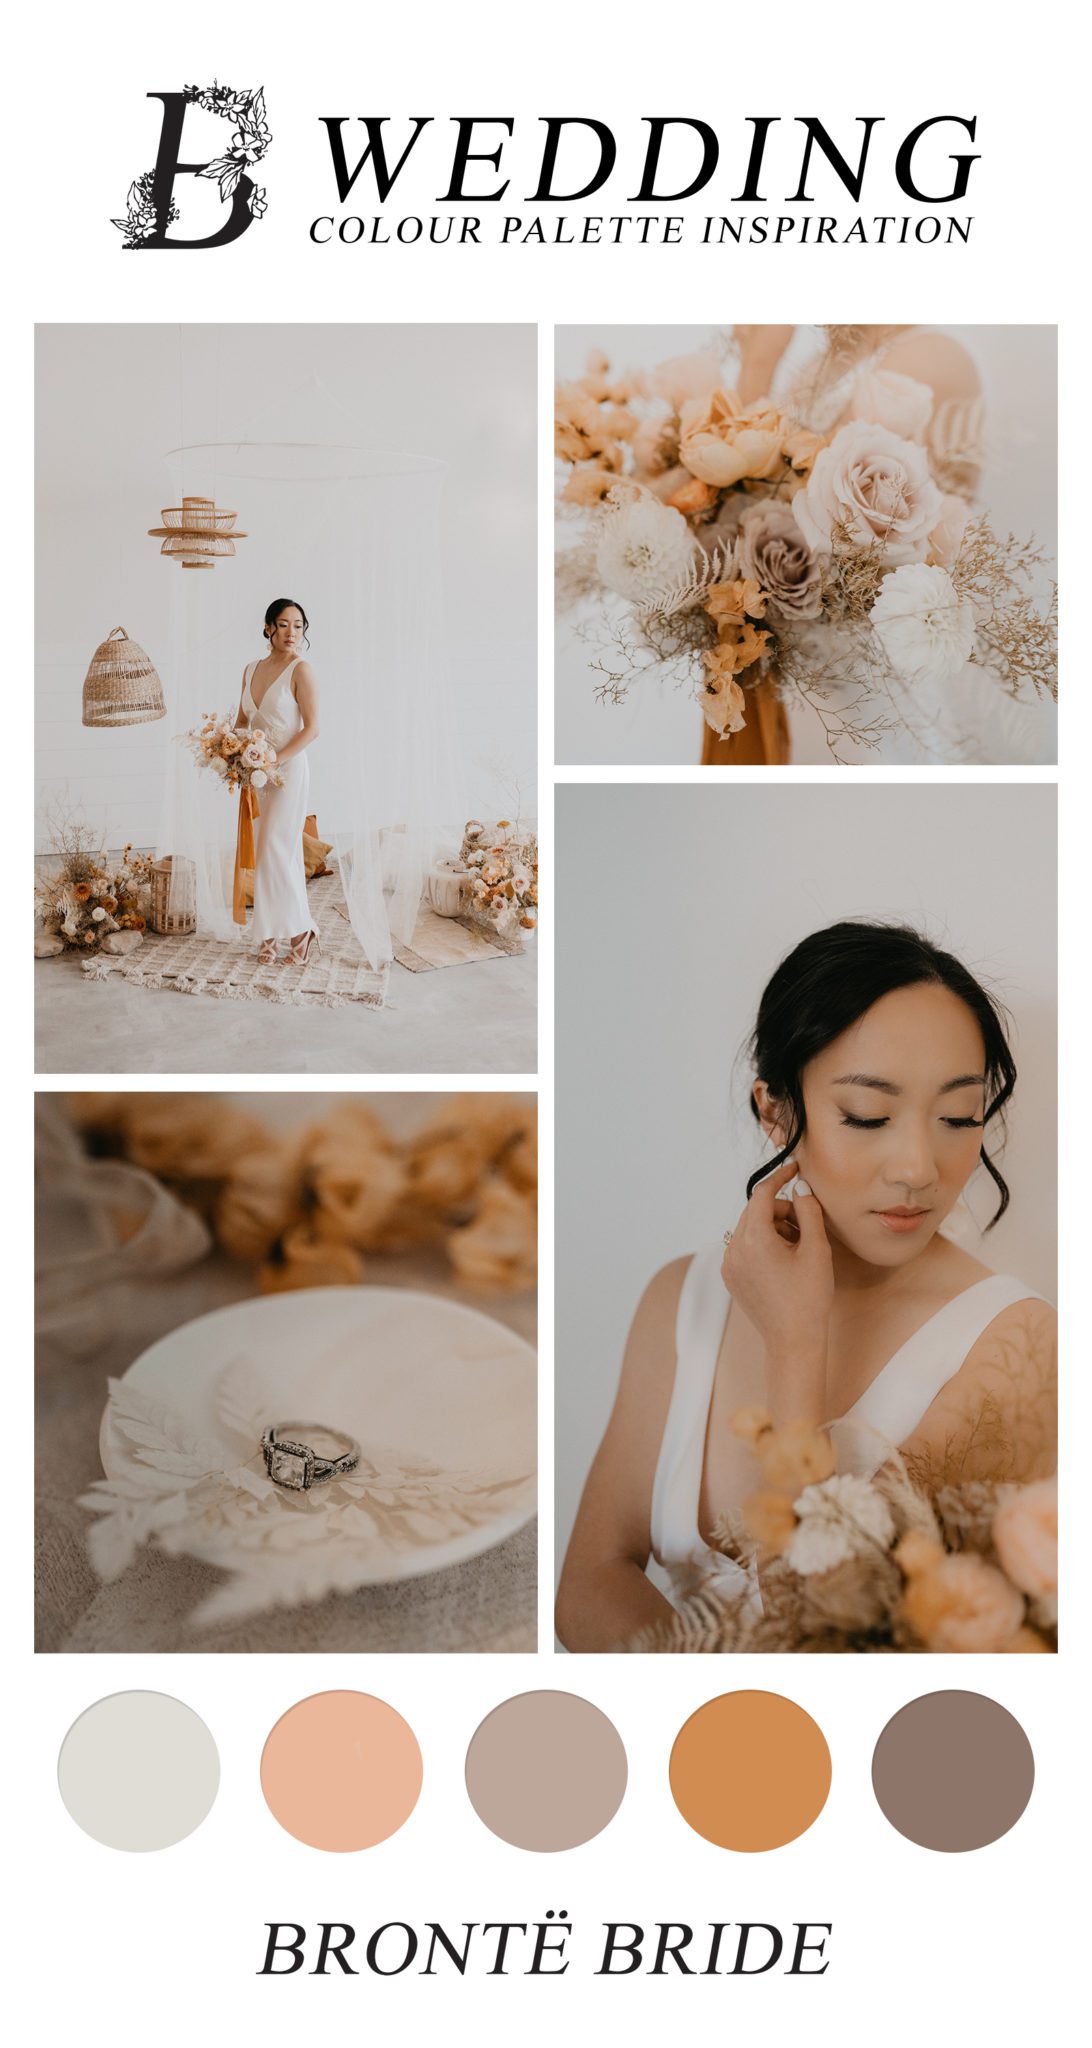 Boho Wedding Colour Palette Inspiration | Wedding Colour Scheme, Fall Wedding Inspiration with Ochre, Mustard, Tan, and Wheat Tones